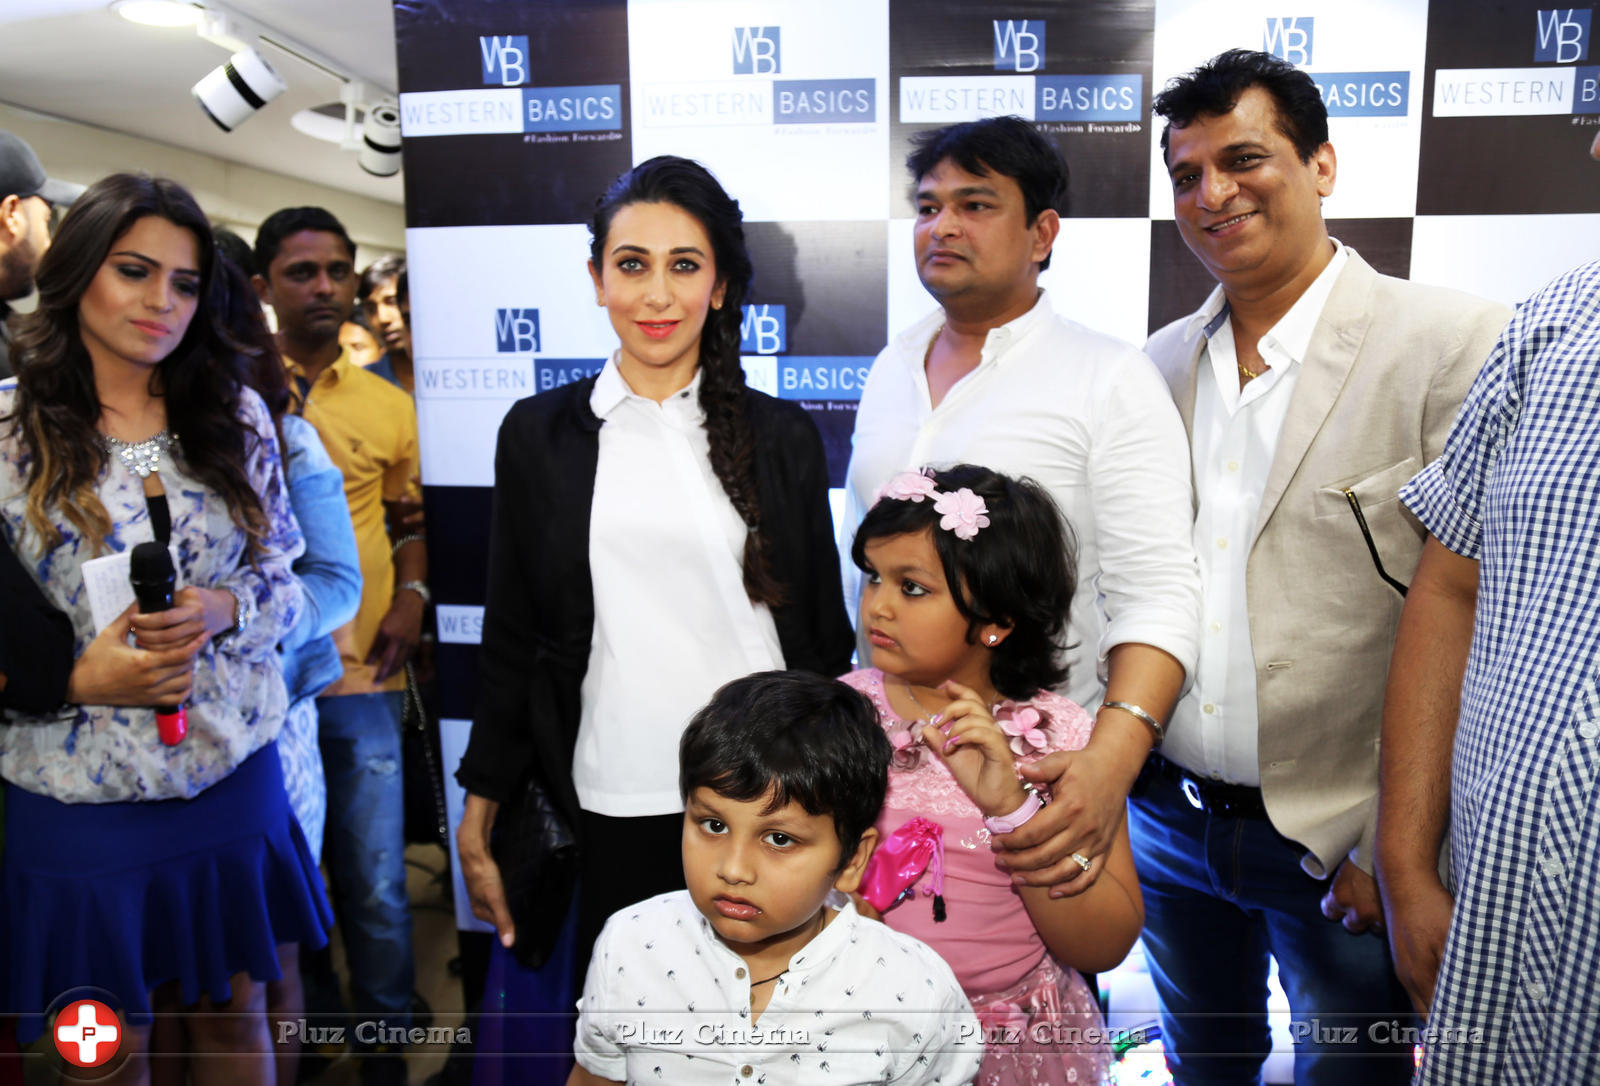 Karisma Kapoor Inaugurated Western Basics Kids Wear Store Photos | Picture 1309077